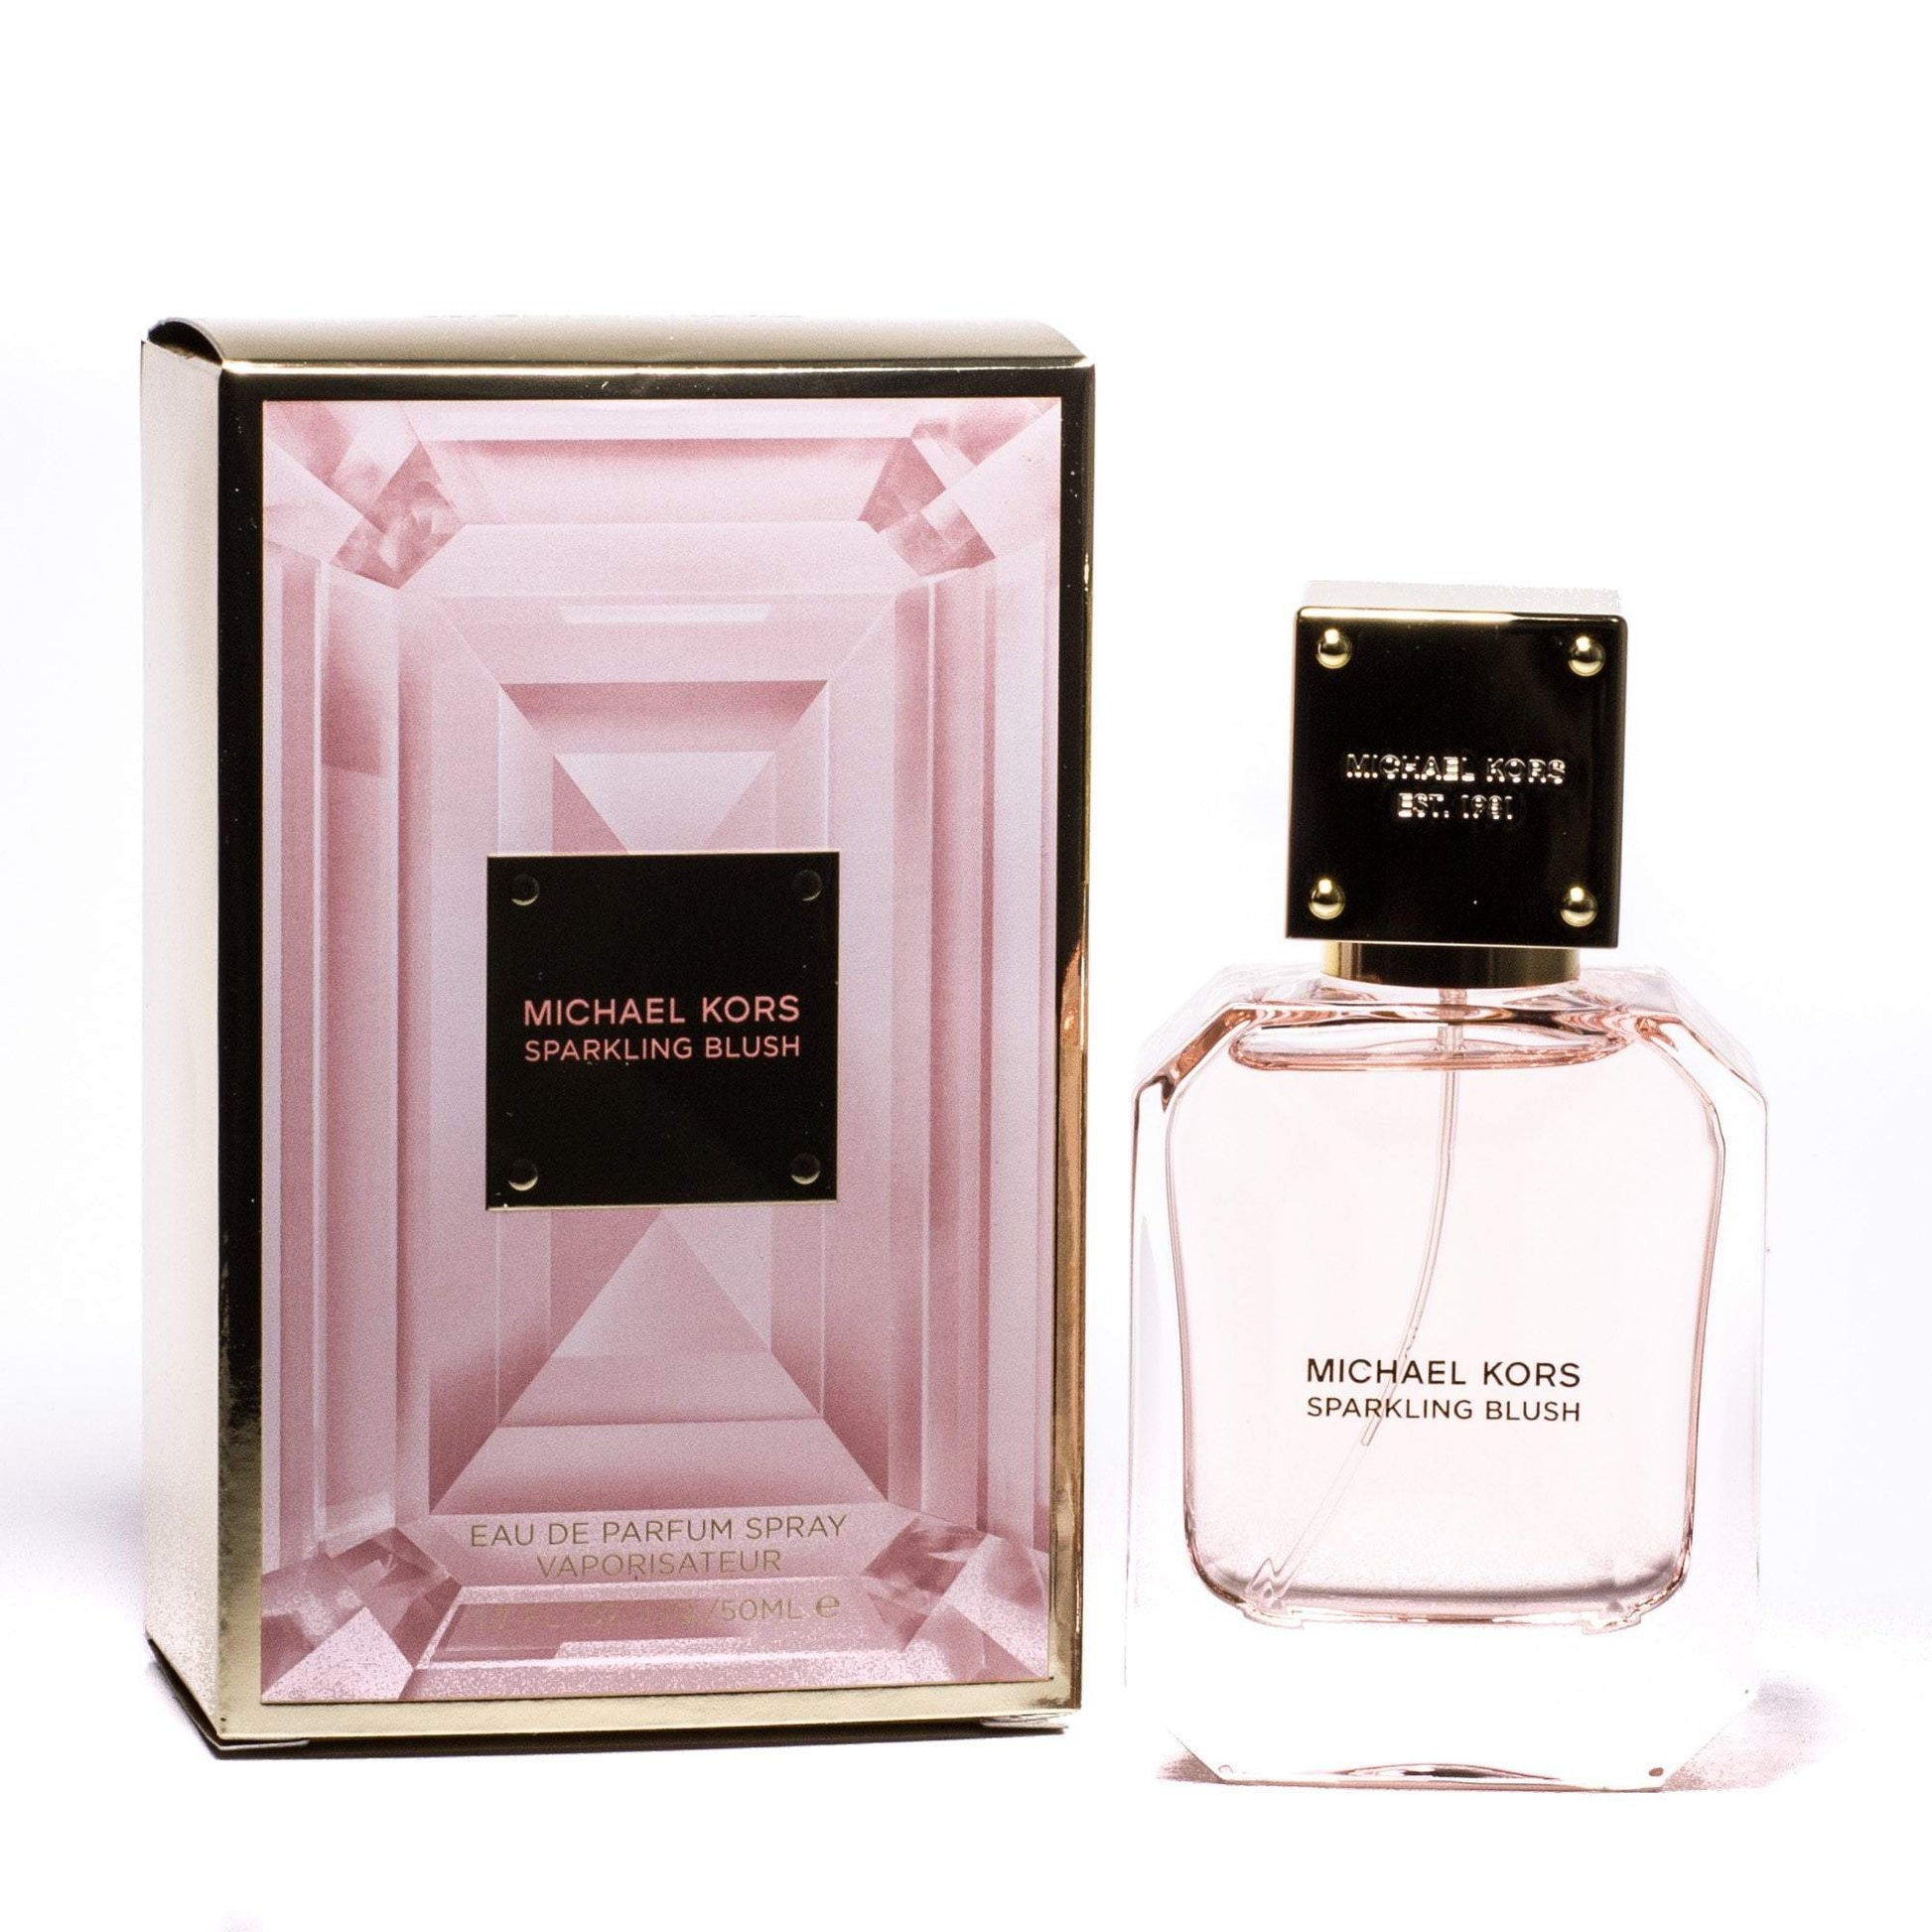 Sparkling Blush Eau de Parfum Spray for Women by Michael Kors 1.7 oz. Click to open in modal